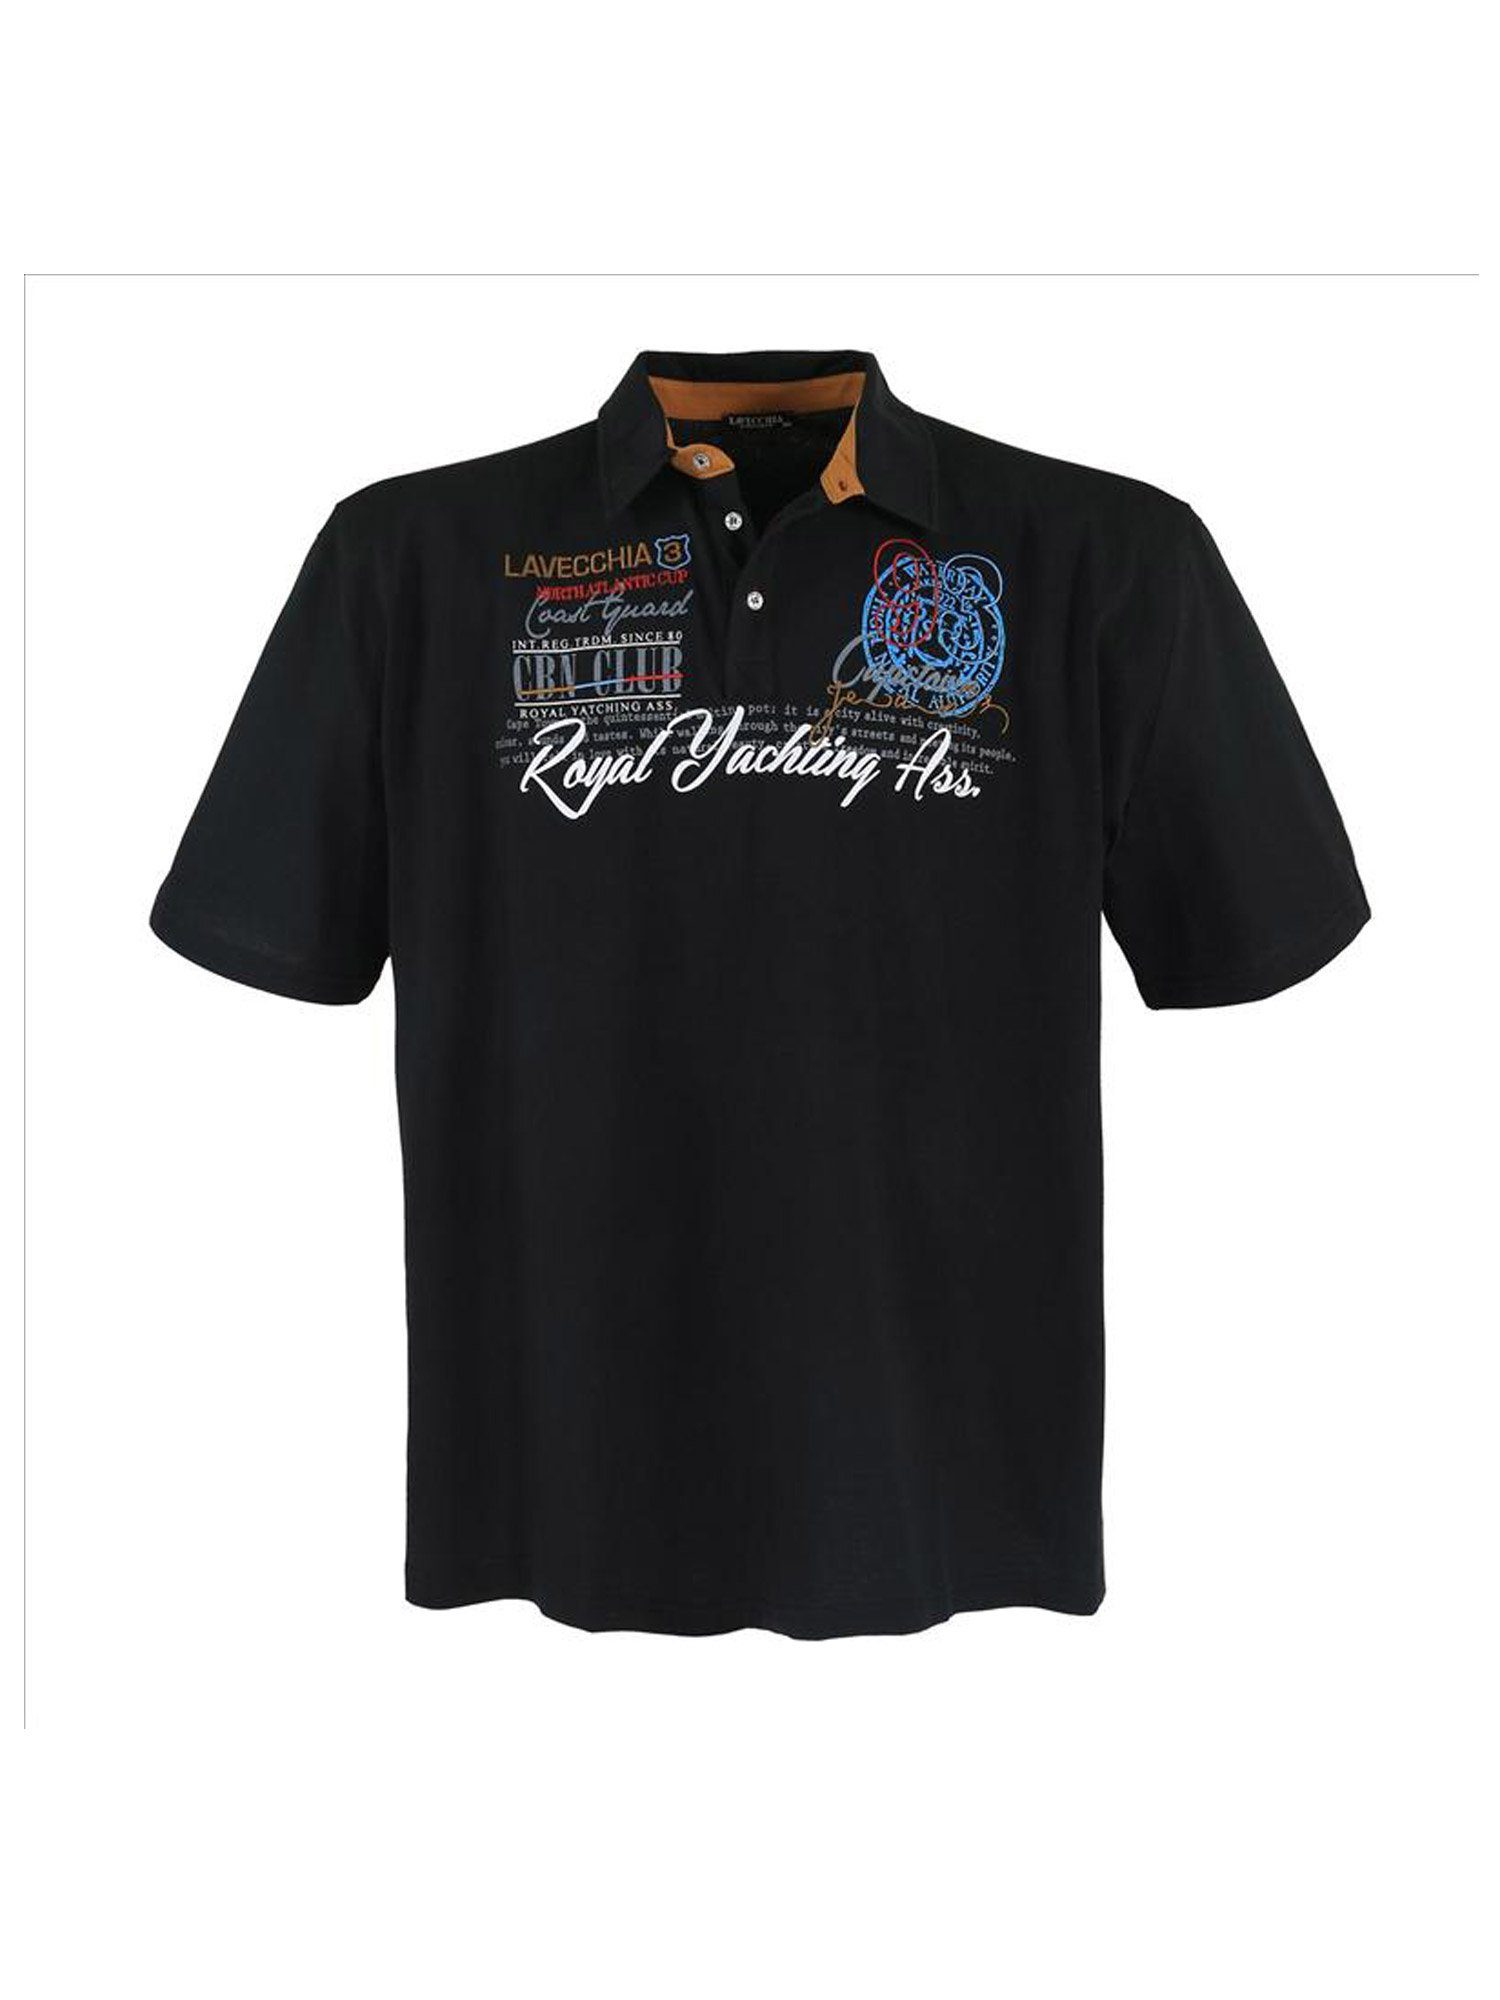 Lavecchia Poloshirt Übergrößen Herren Polo Shirt LV-4688 Shirt Herren schwarz Polo